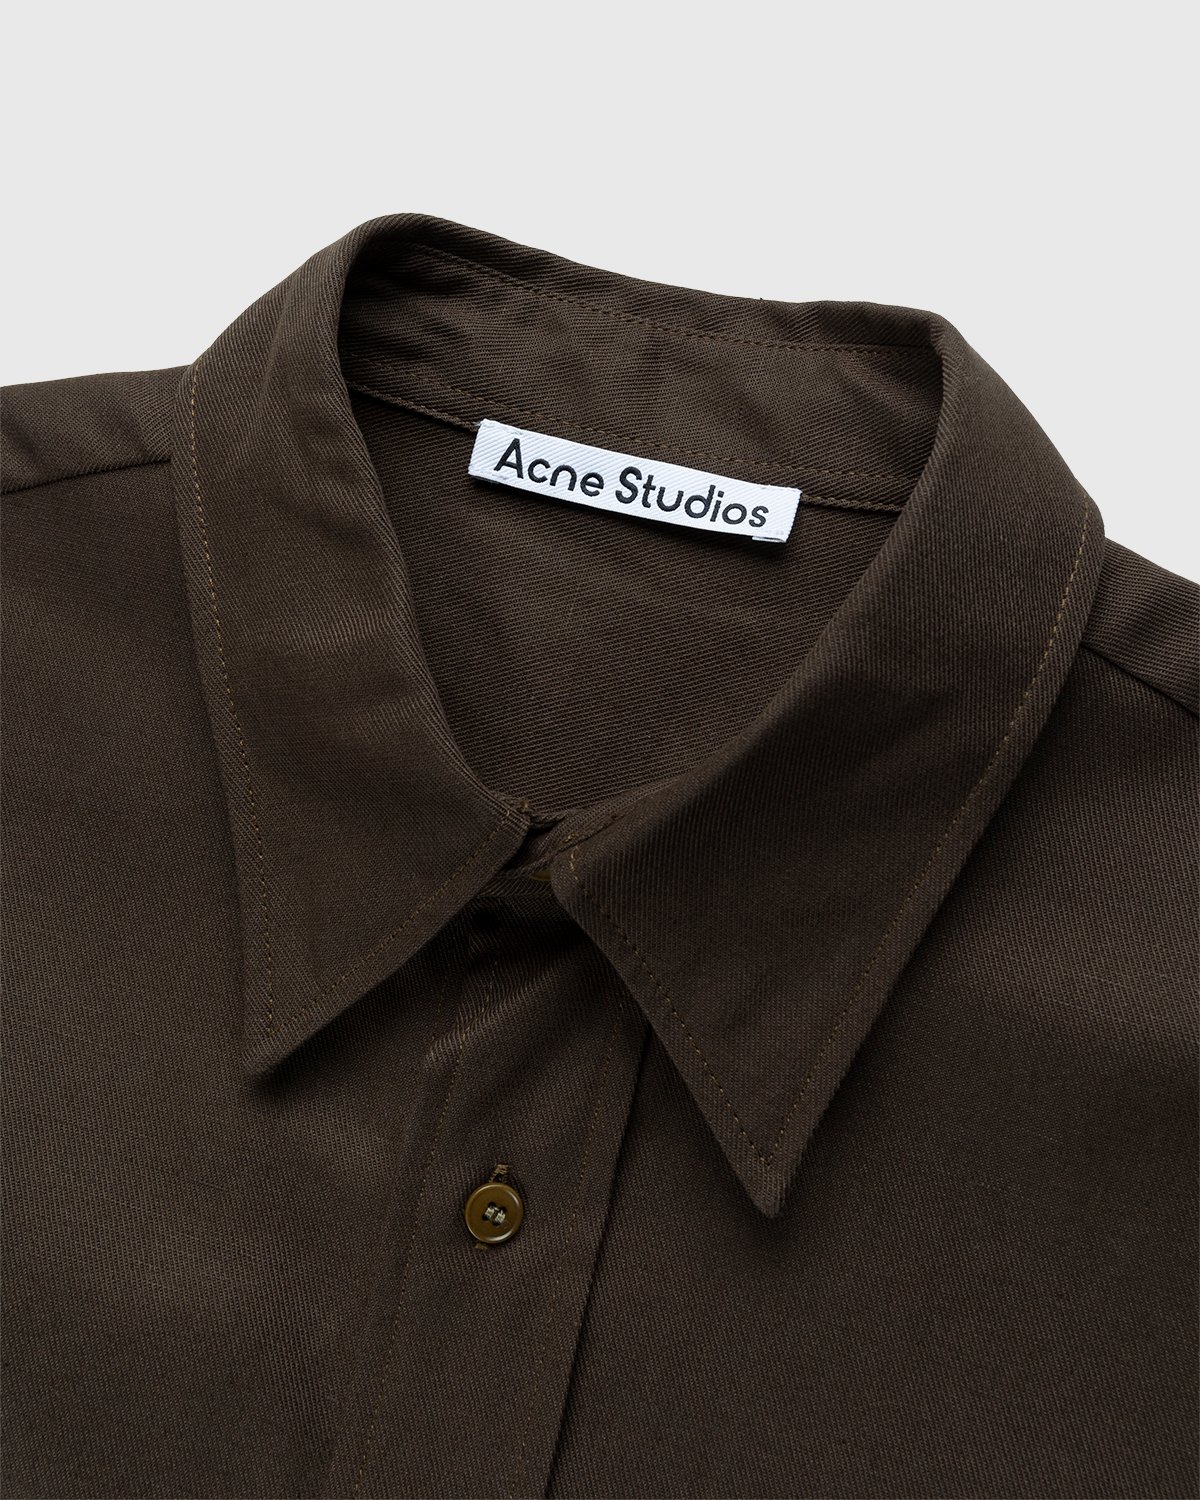 Acne Studios - Linen Blend Button-Up Shirt Dark Olive - Clothing - Green - Image 4